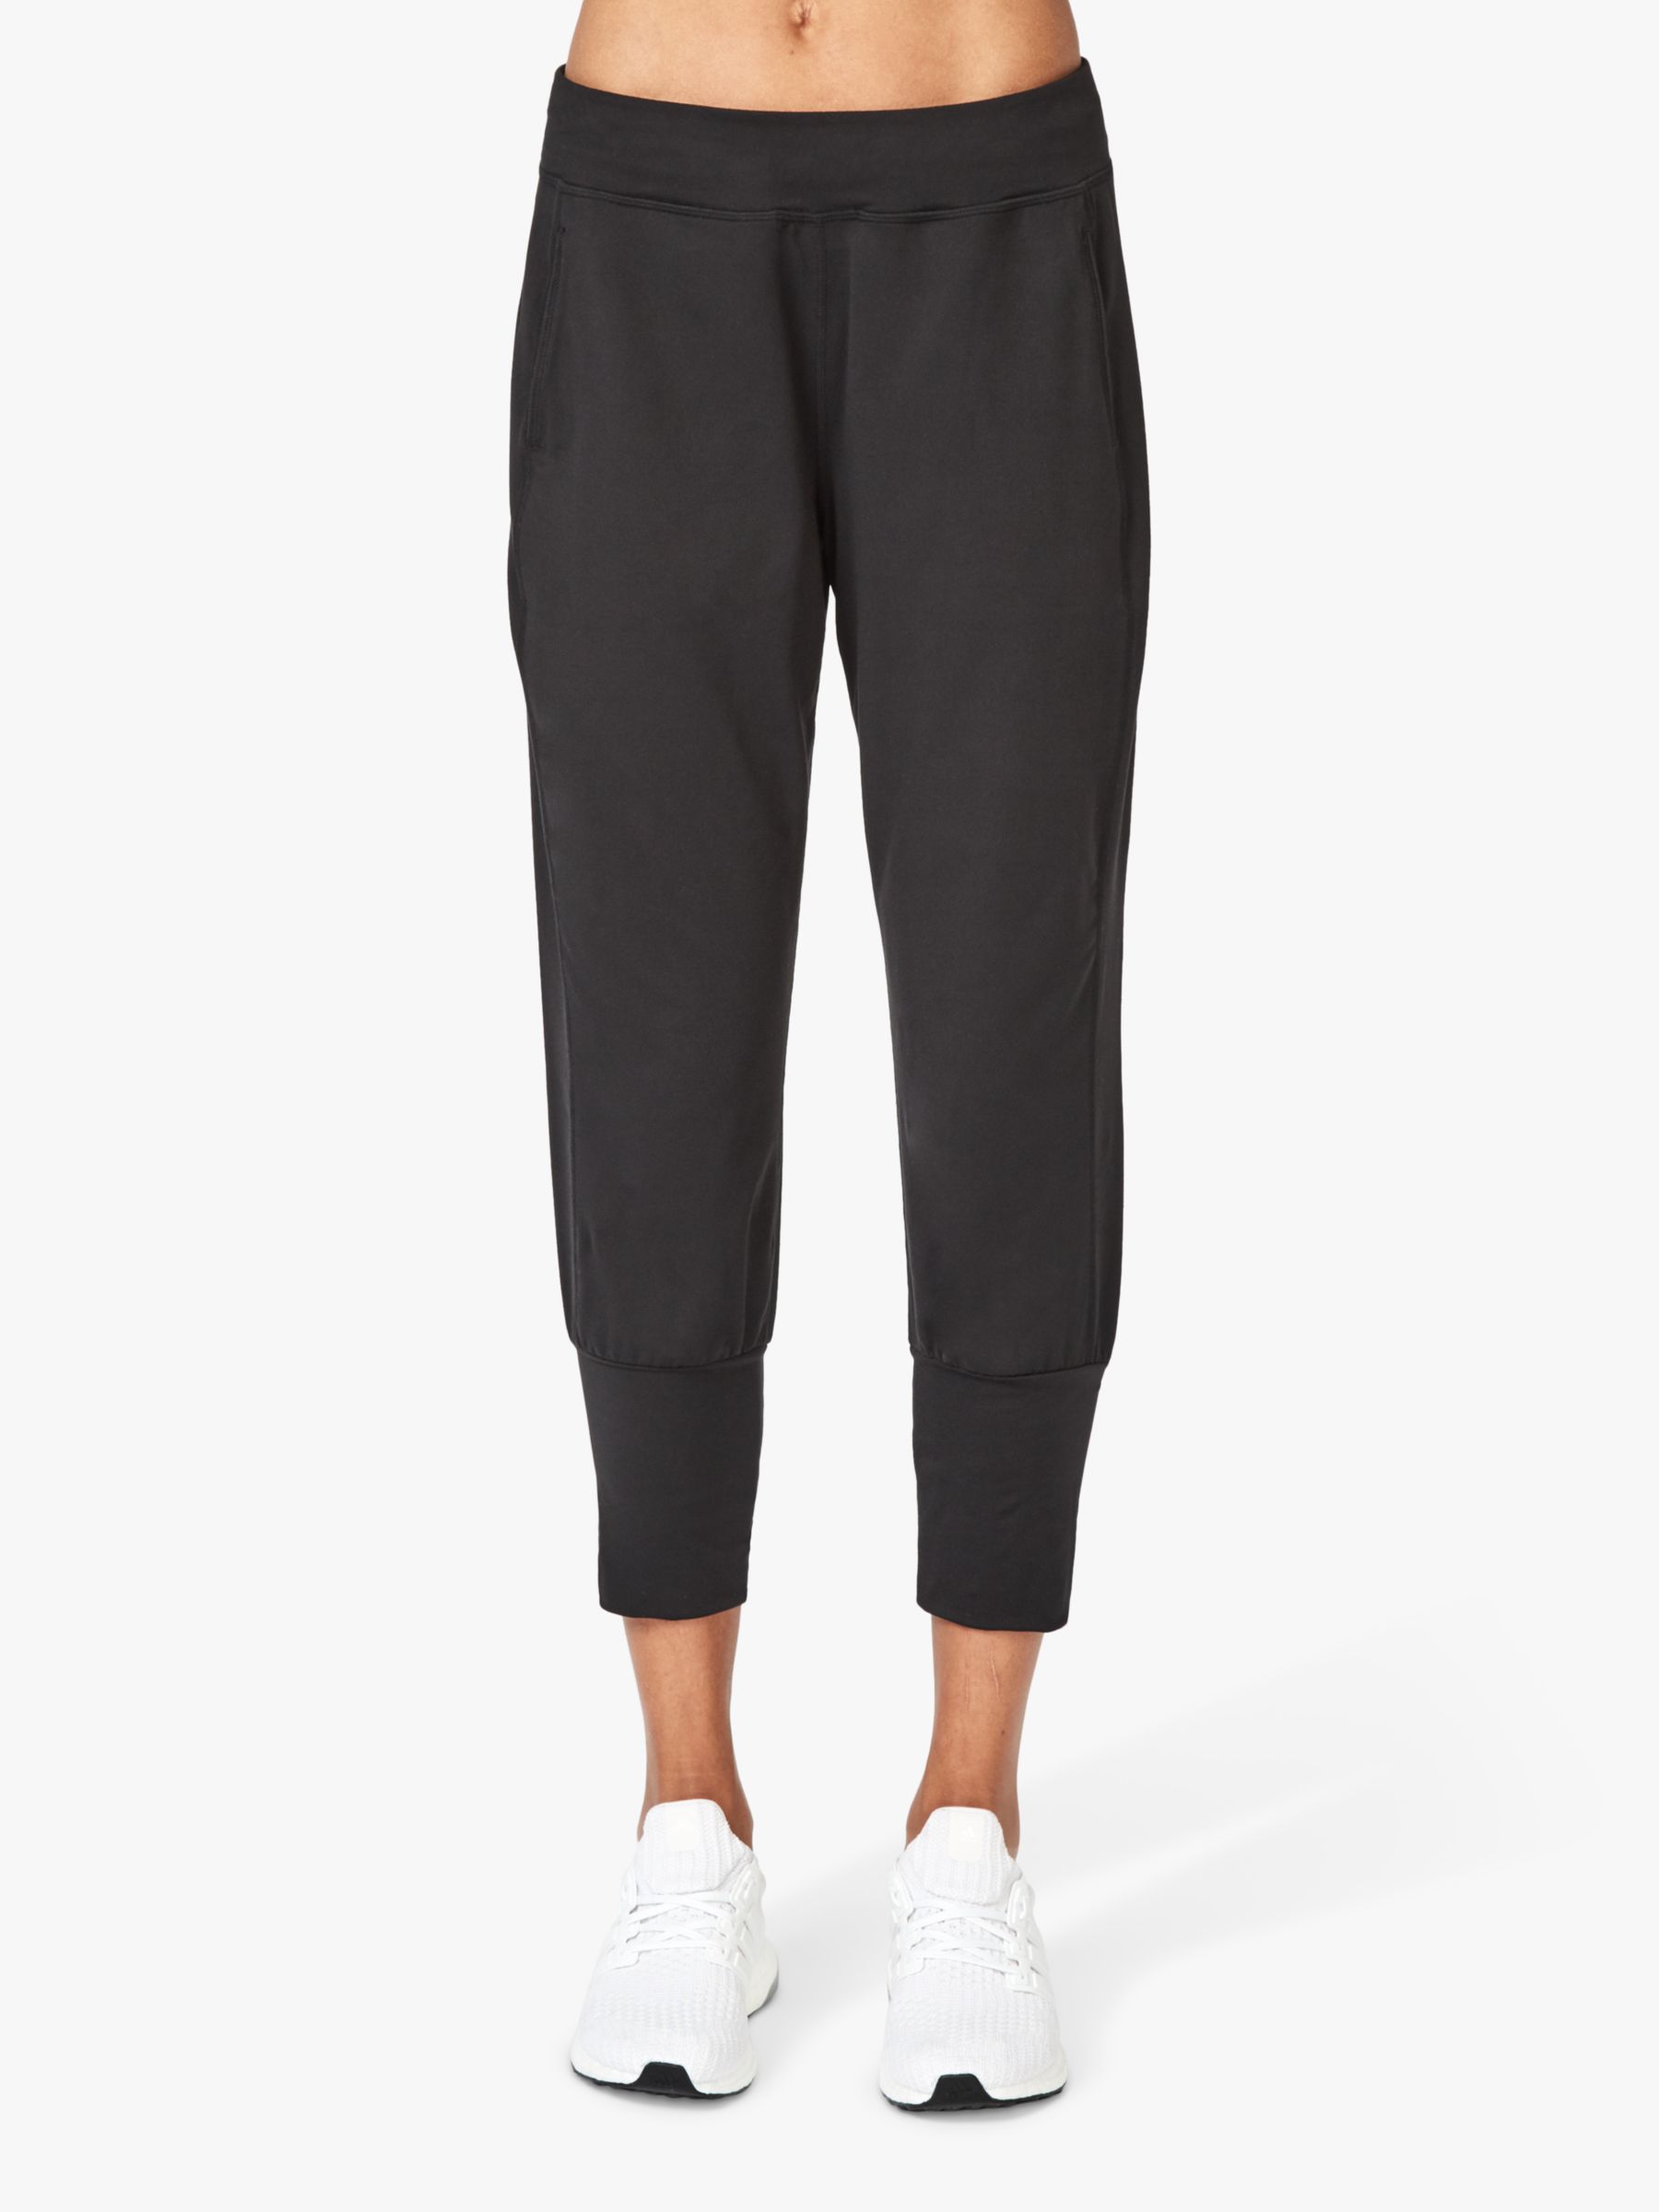 Gary Cropped Yoga Pants - Navy Blue, Women's Trousers & Yoga Pants